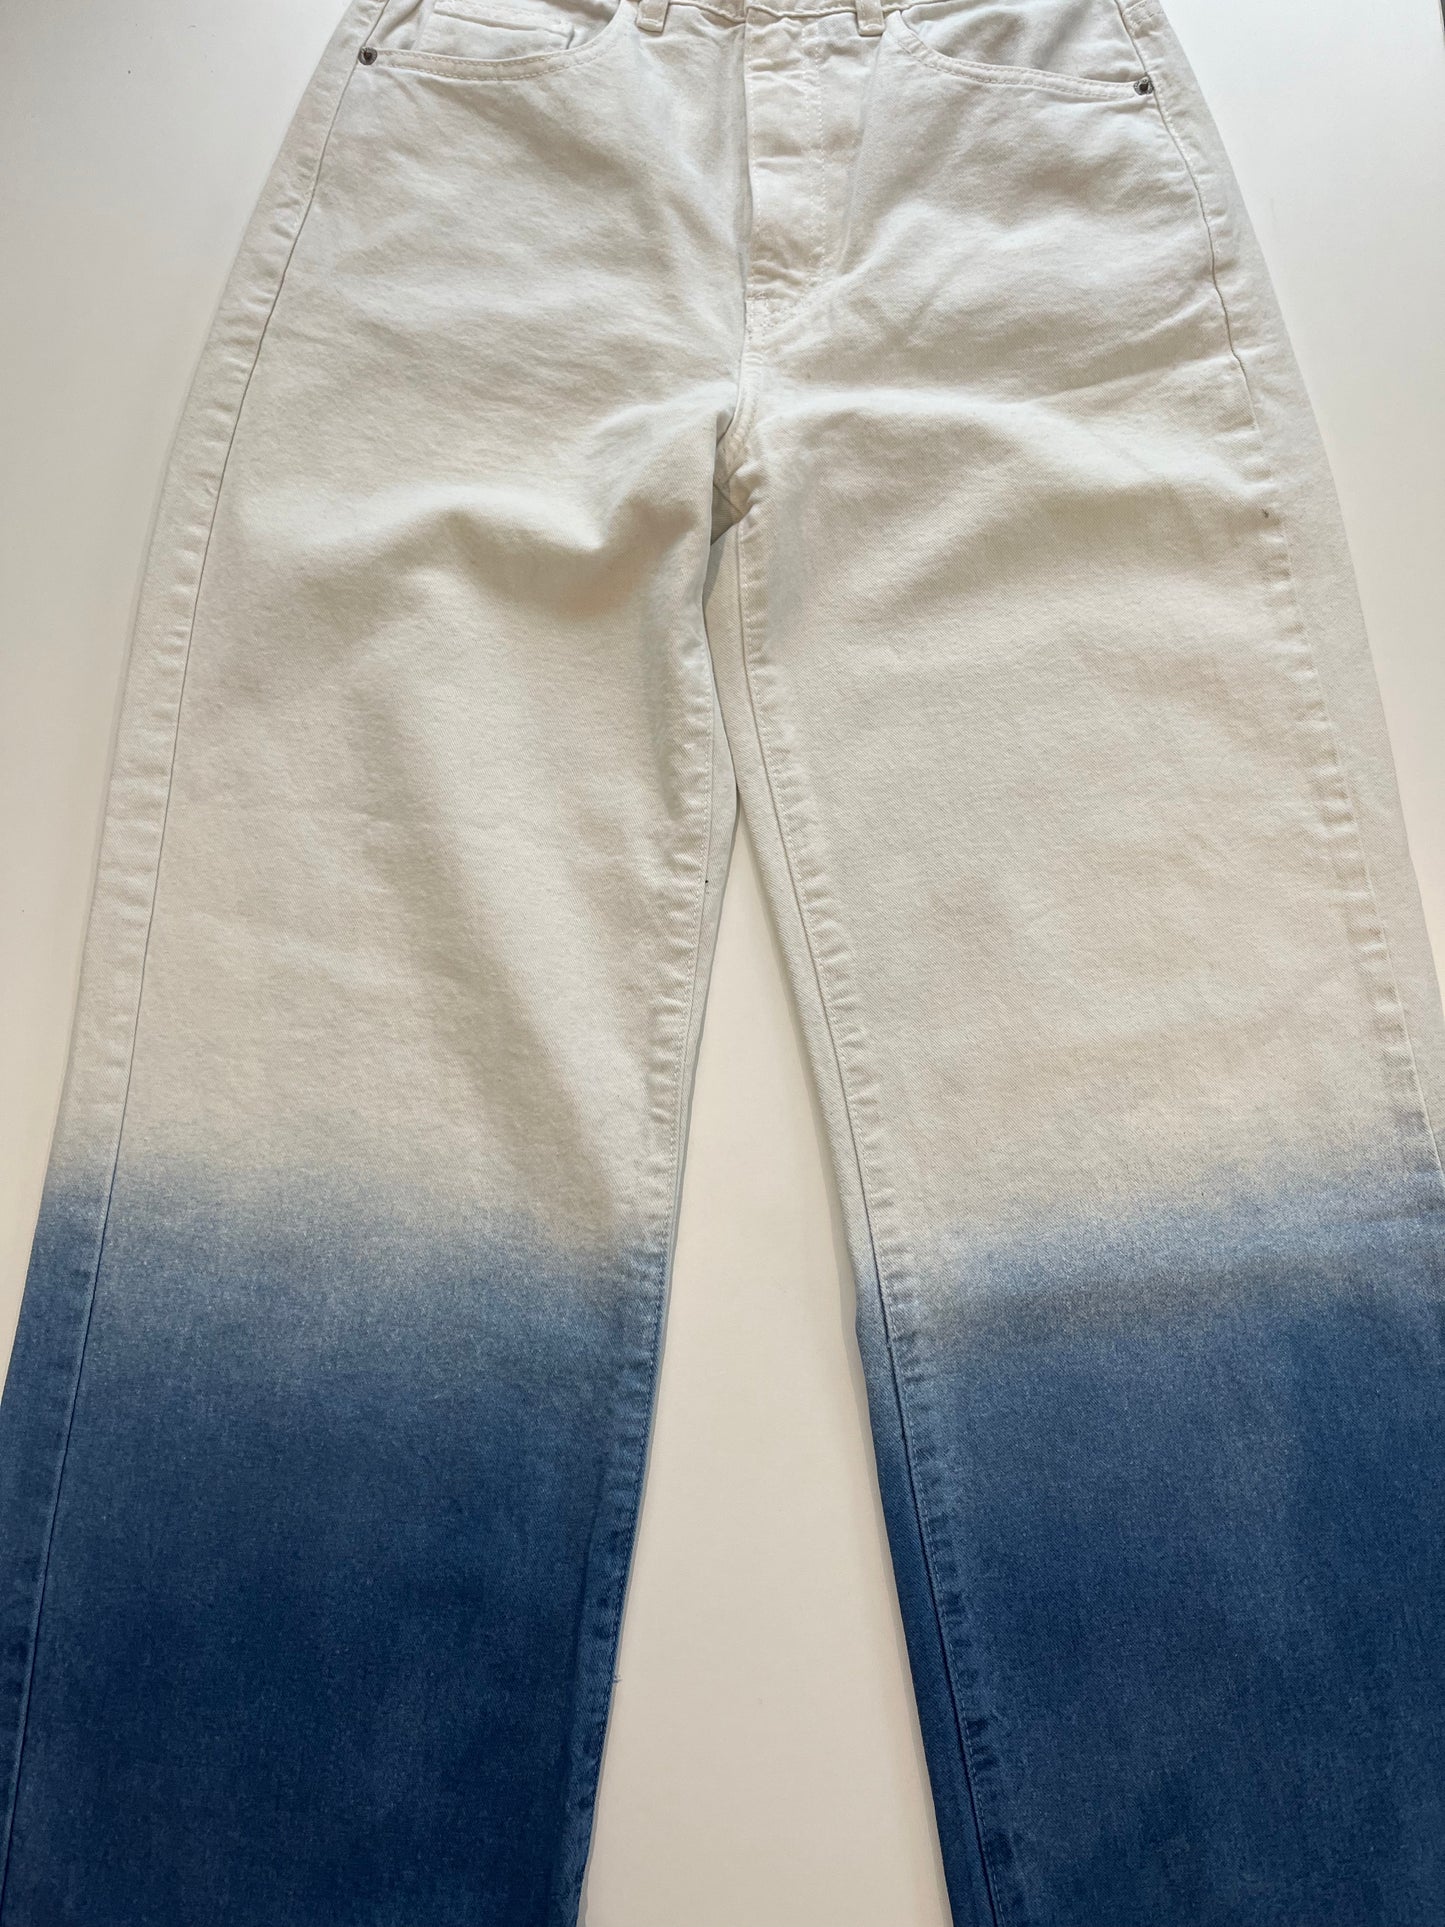 GG014: Gradient Jeans